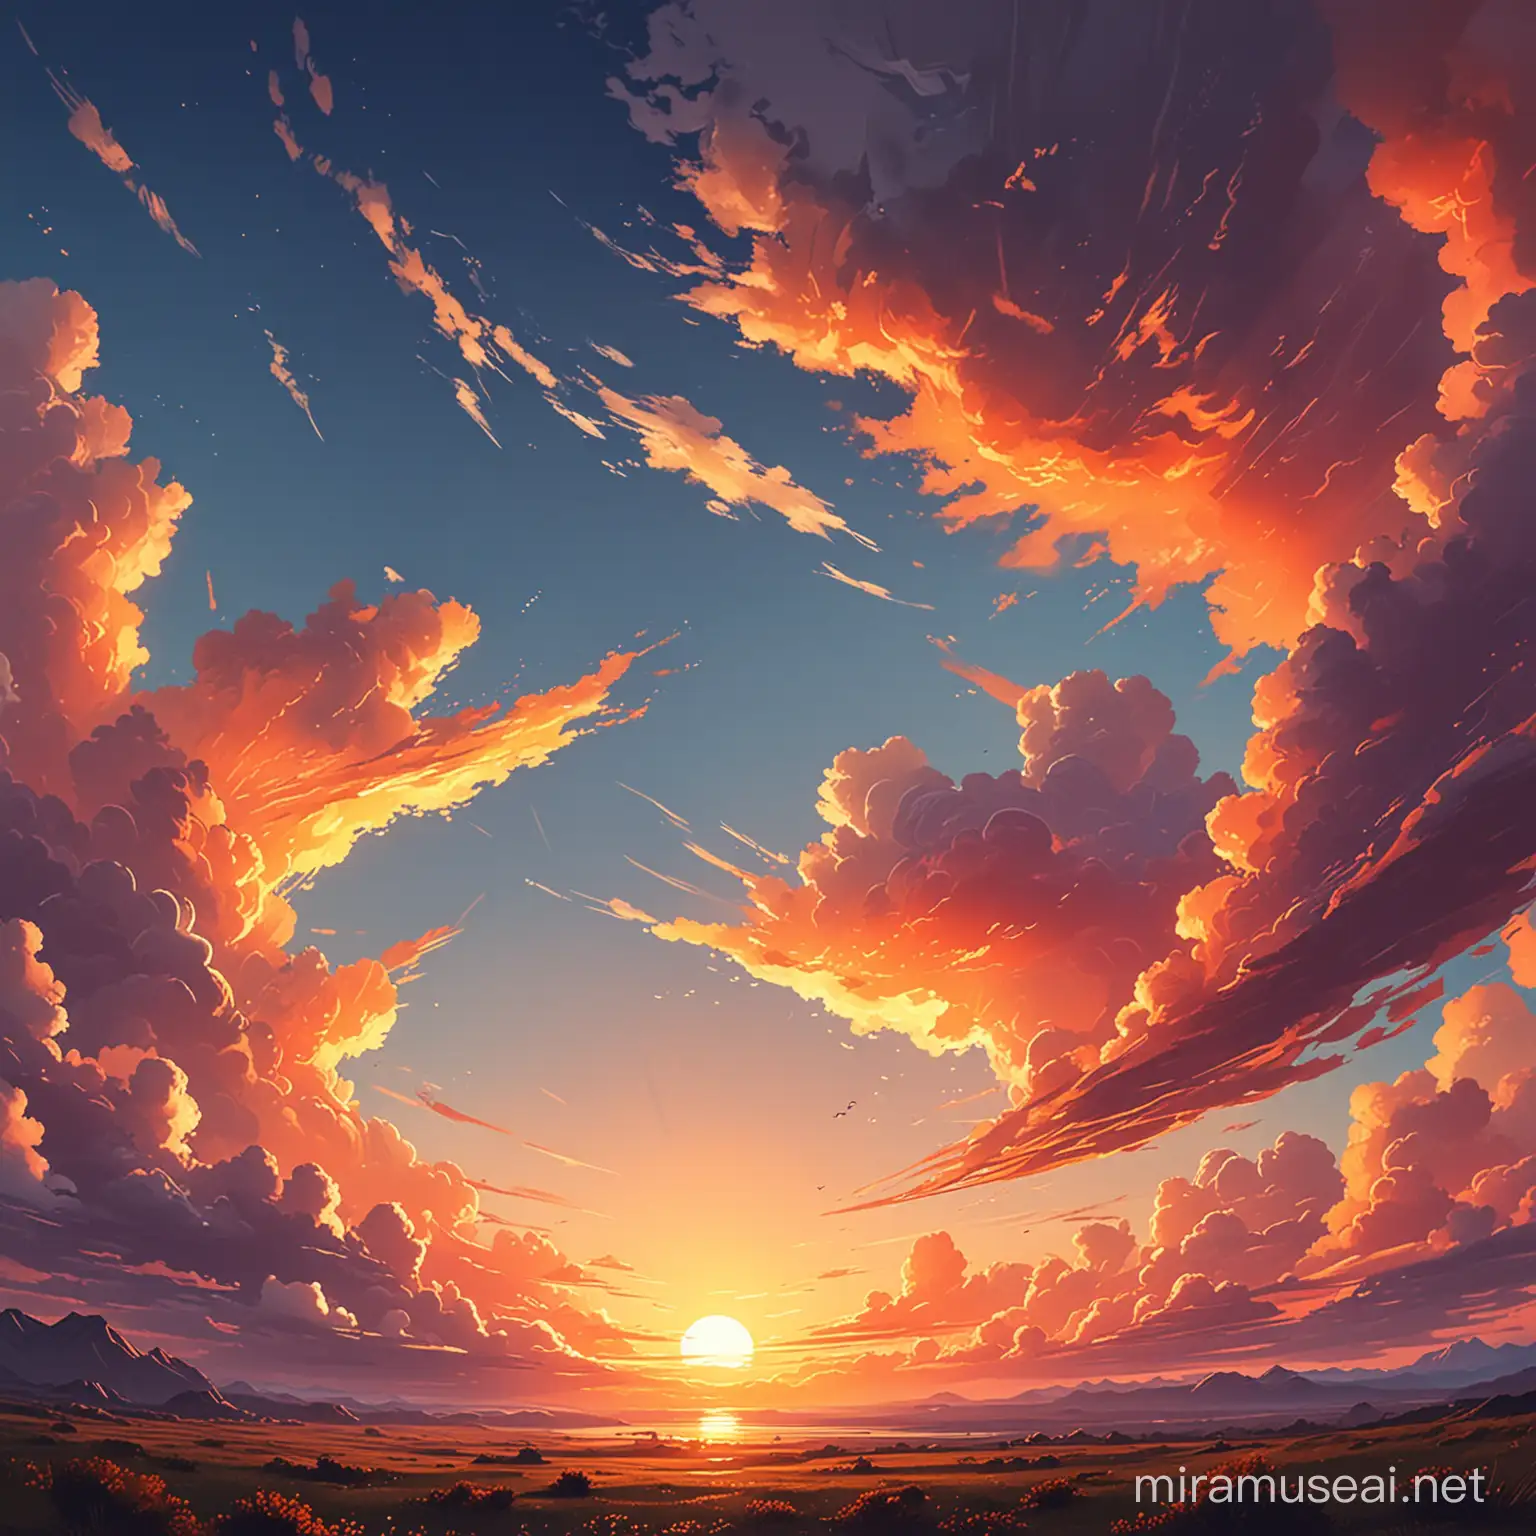 a stylized sky and sunset